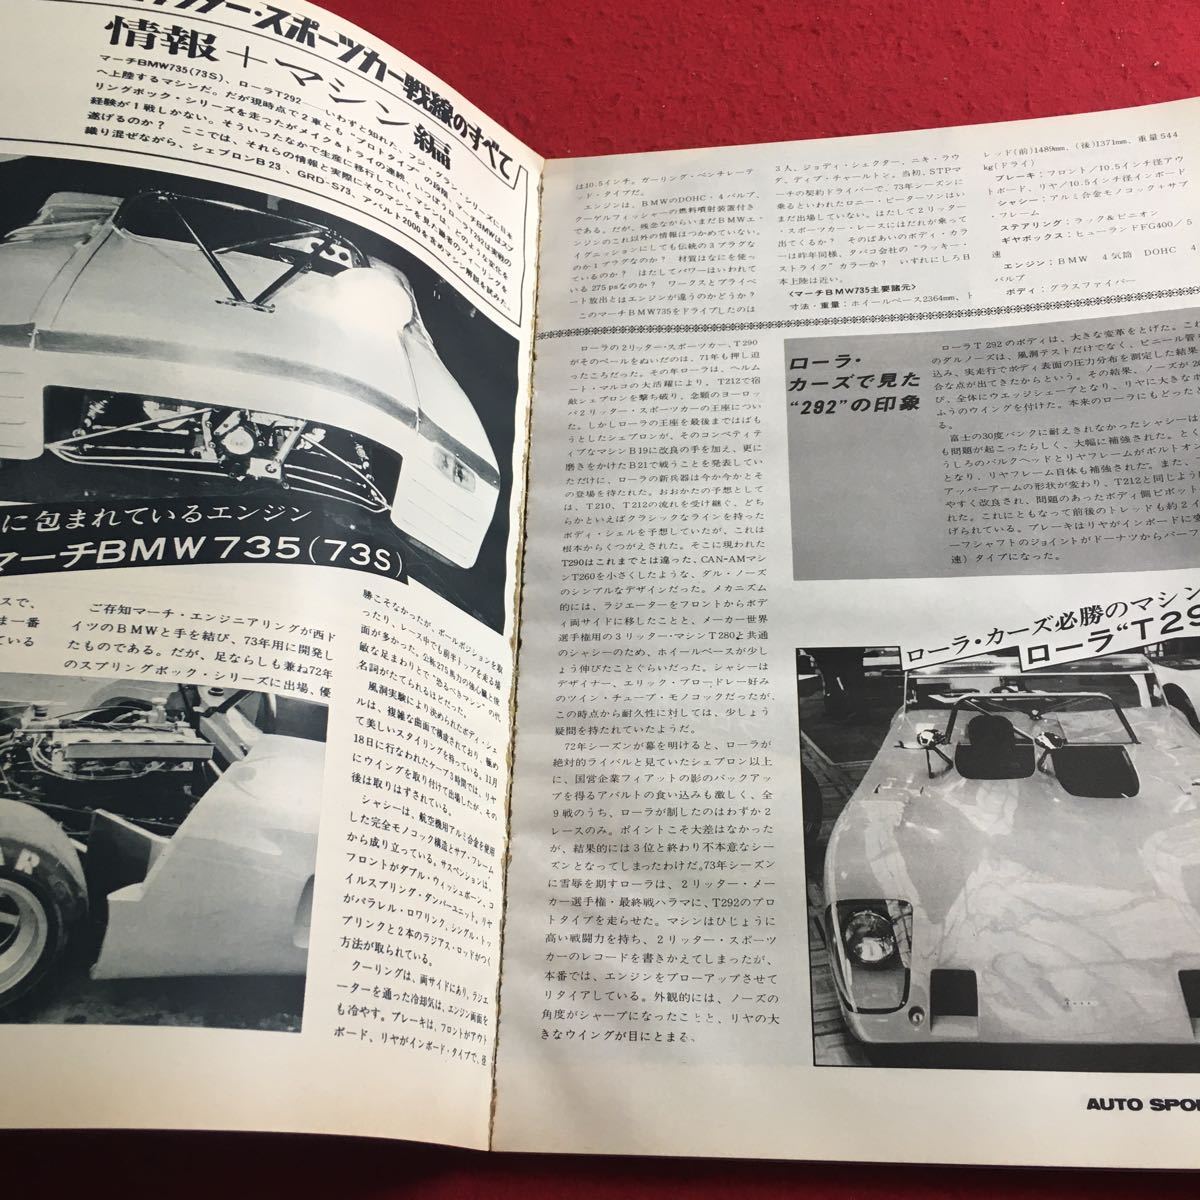 b-205※3 AUTO SPORT 1973 biweekly 3/1 No.112 特集:2リッター・スポーツ 三栄書房_ページ分離あり